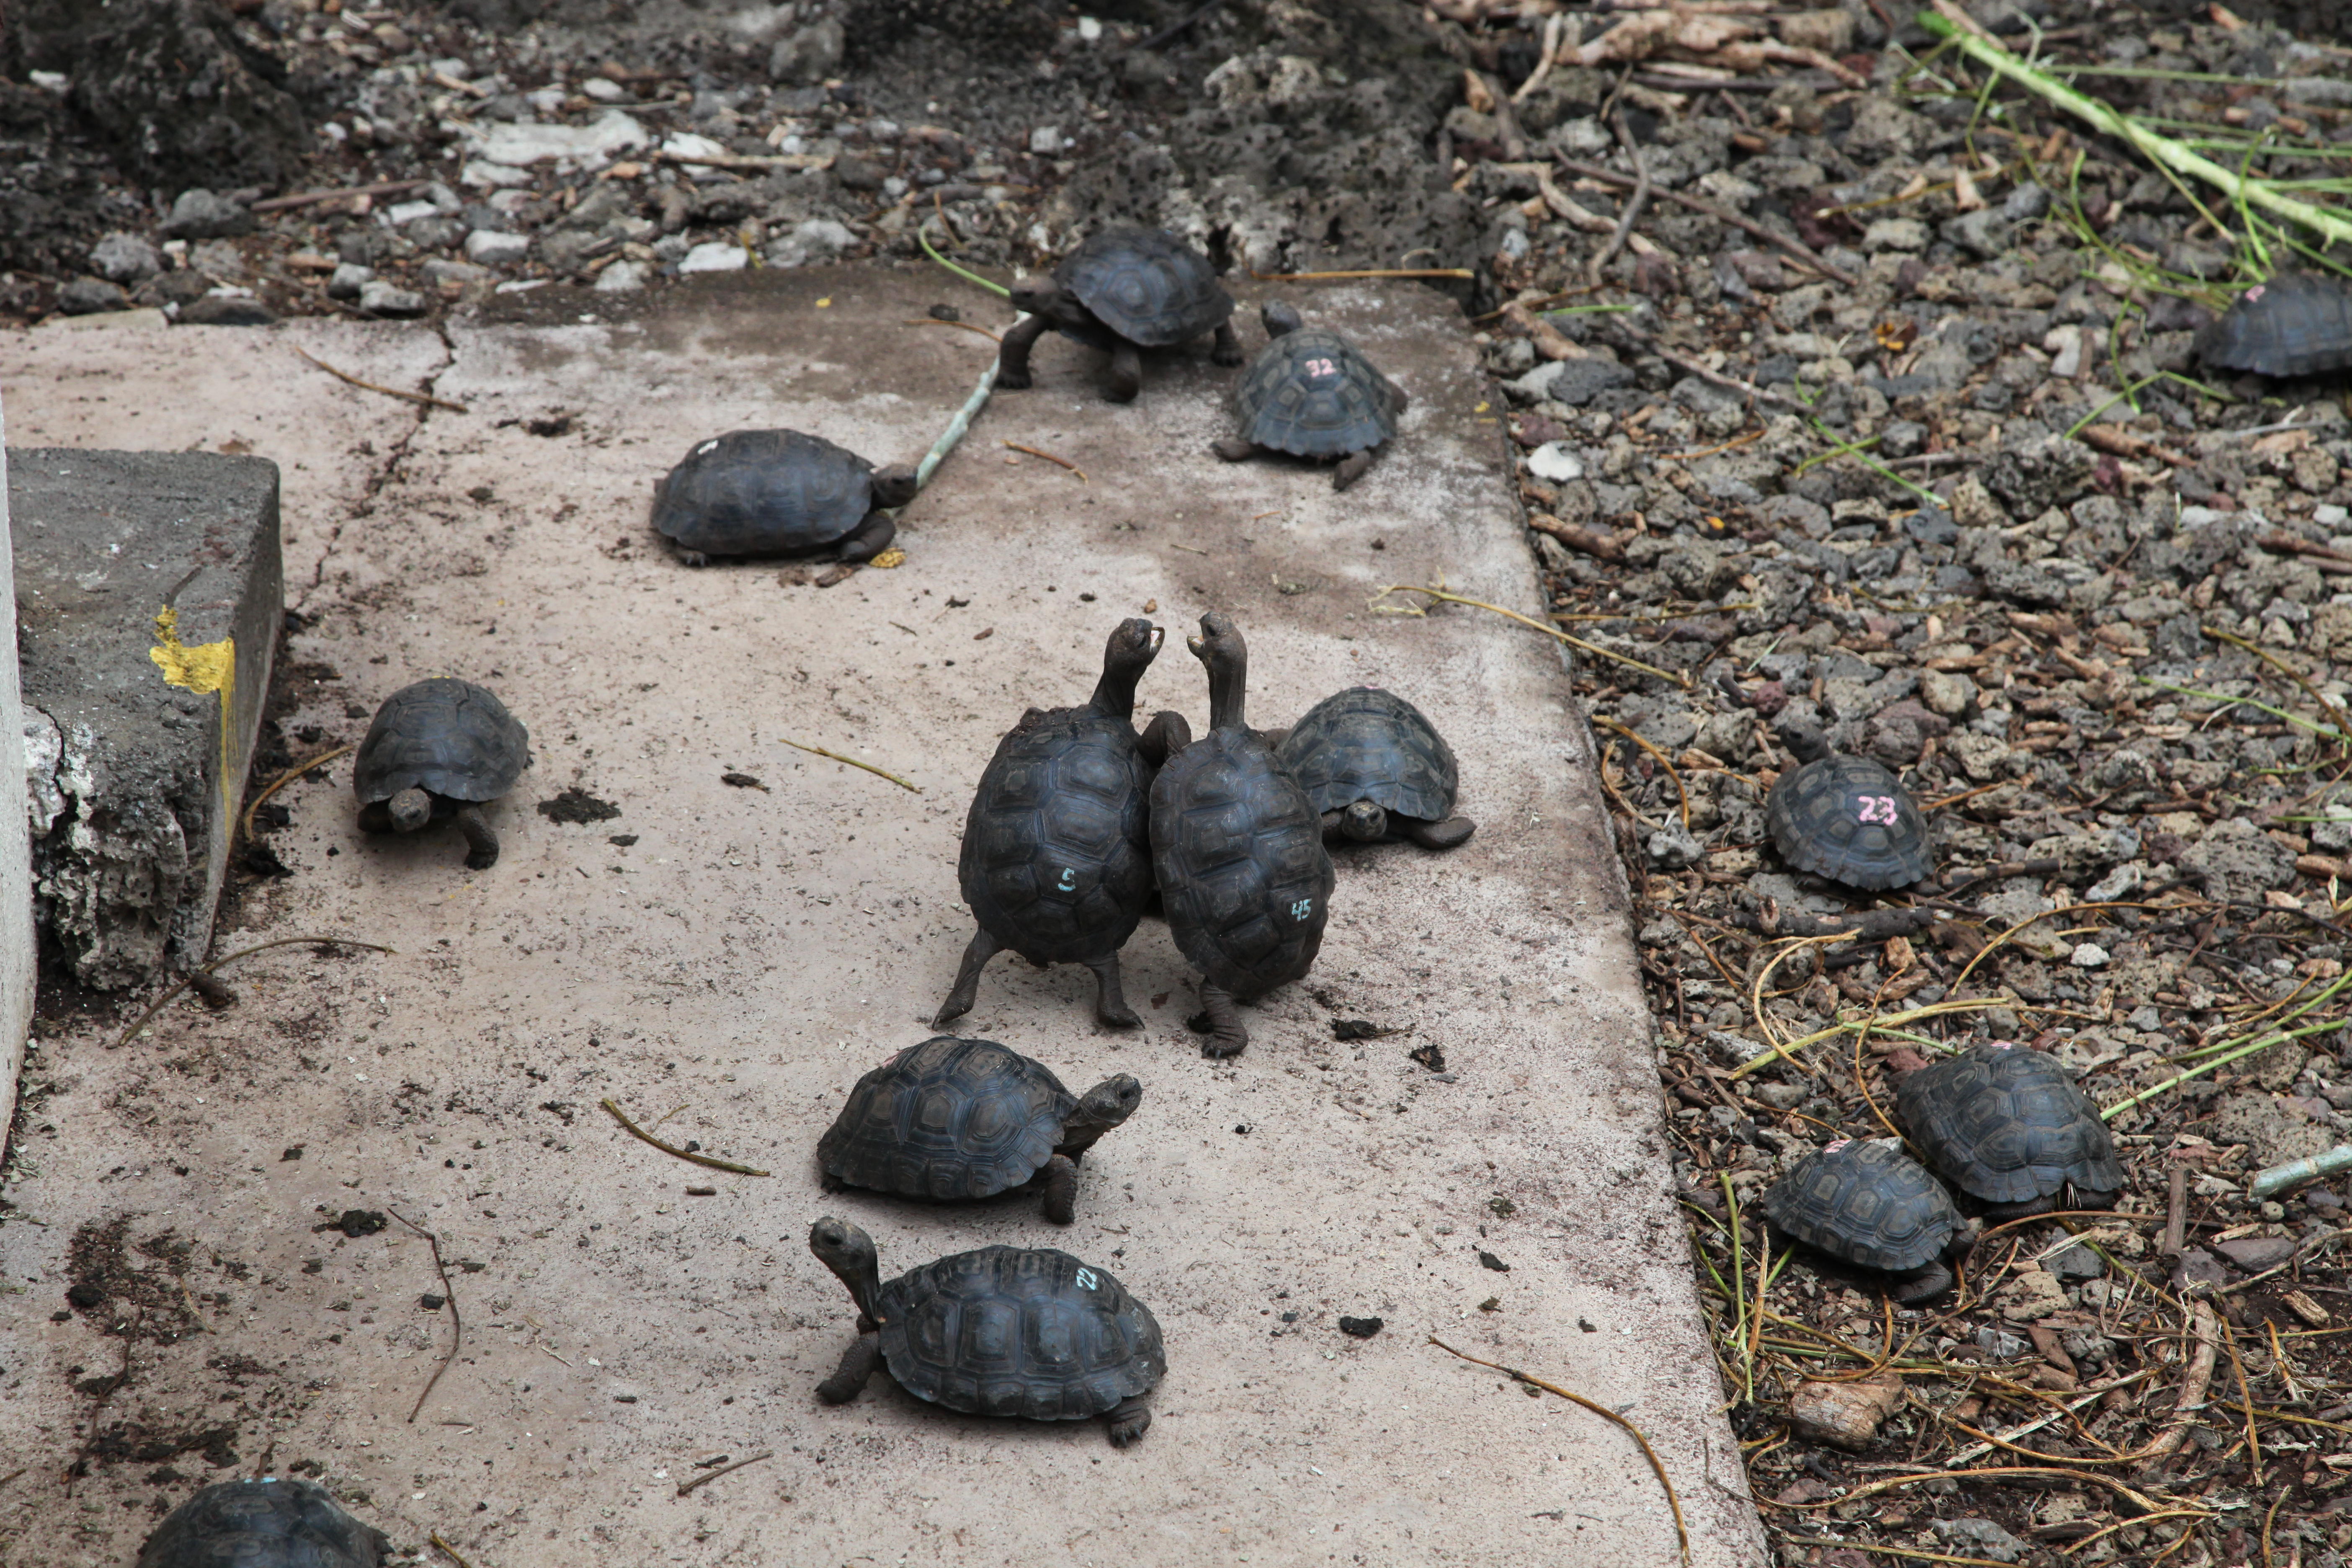 Young Tortoises